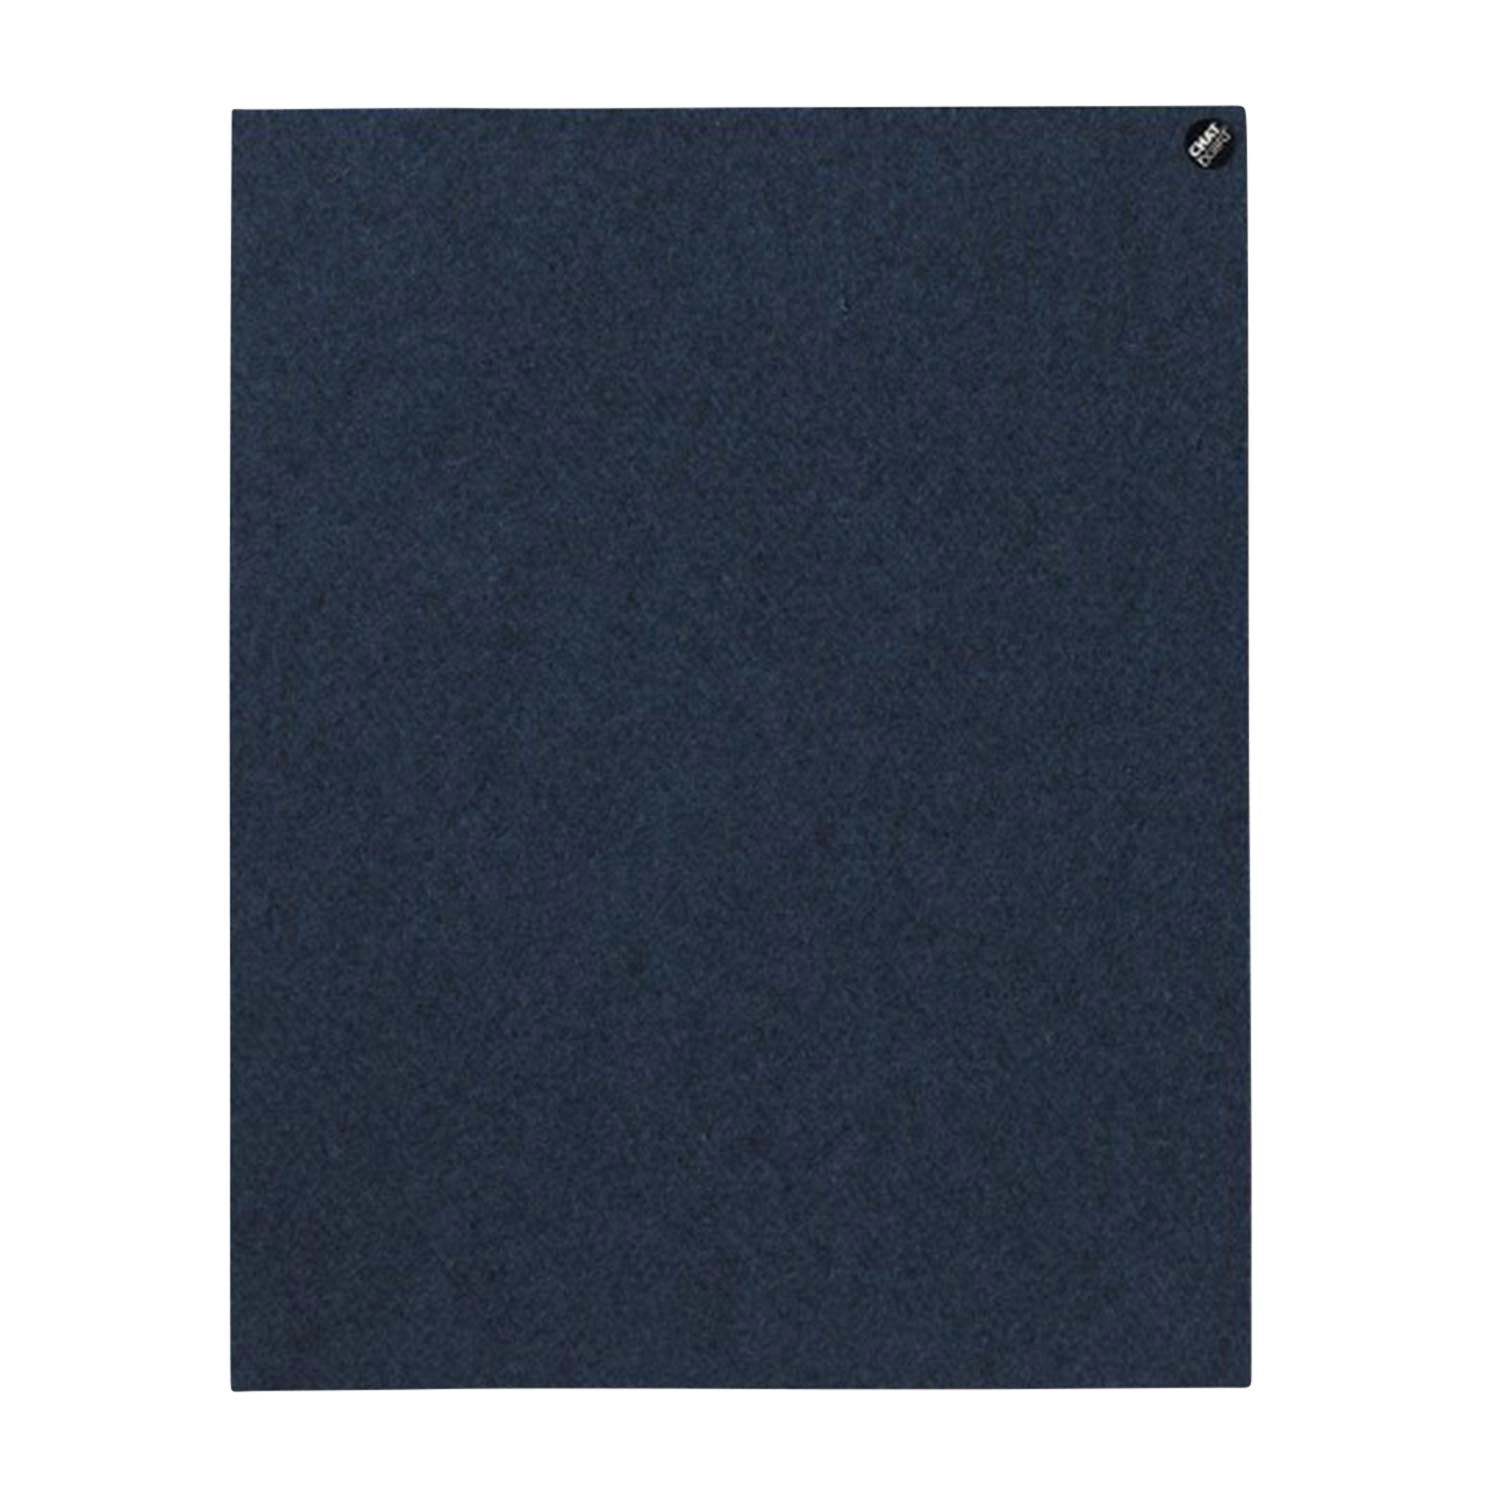 BuzziFelt Pinnwand, Grösse 120 x 120 cm, Ausrichtung vertikal, Buzzifelt (Filz) 75 jeans von Chat Board